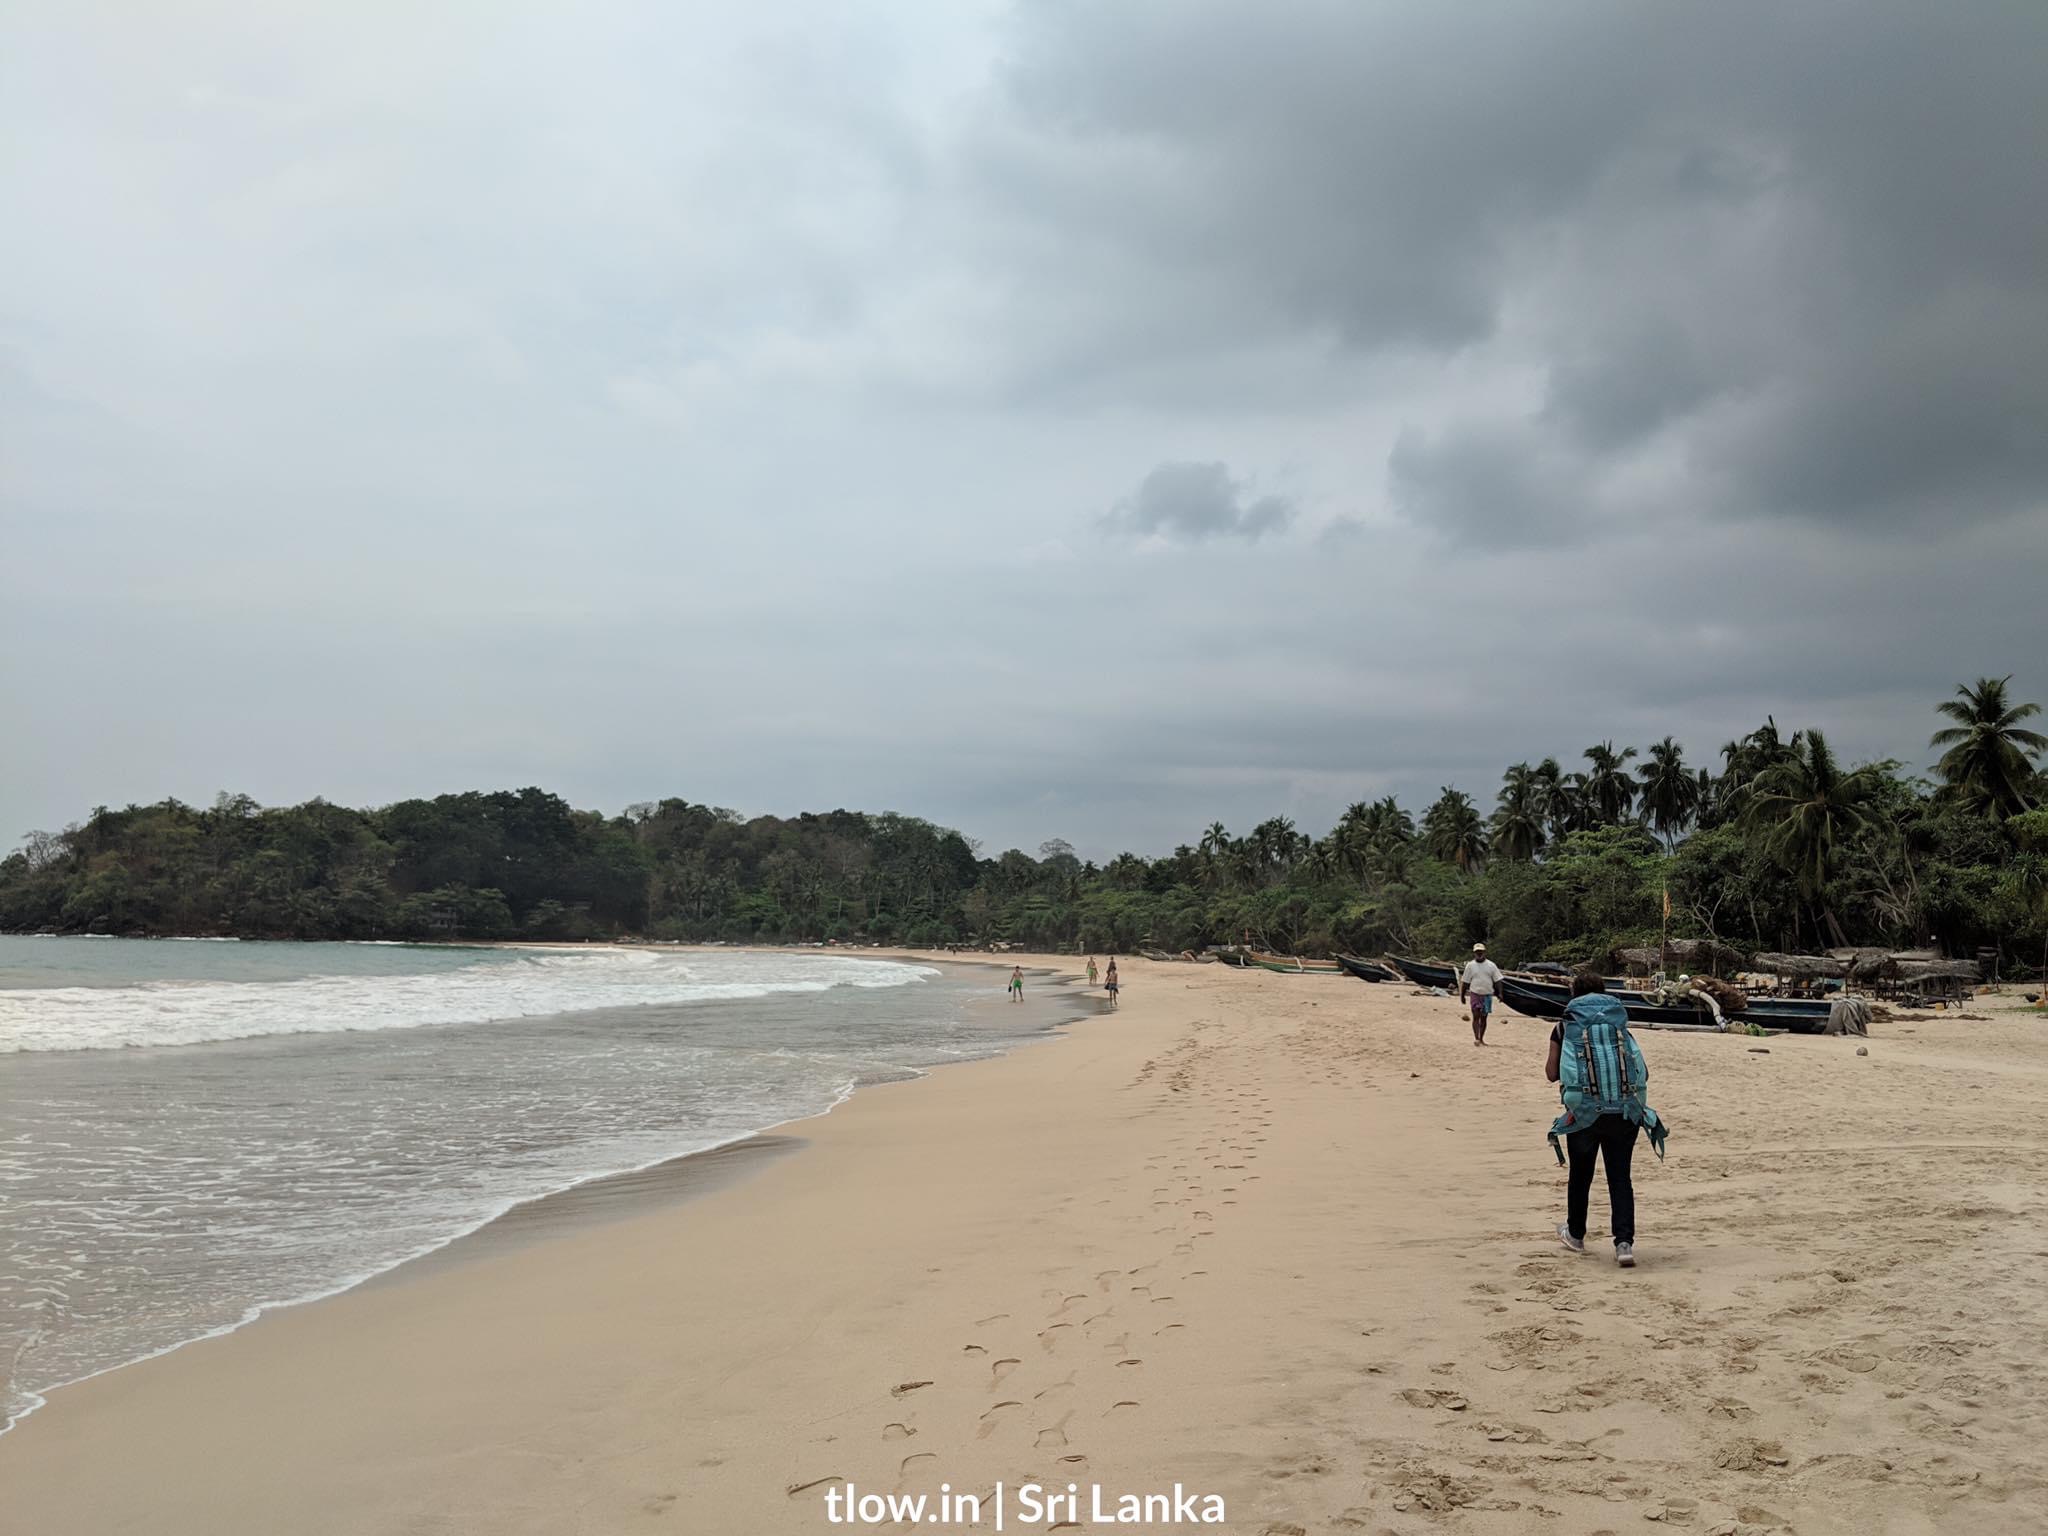 Walking the beach in Sri Lanka